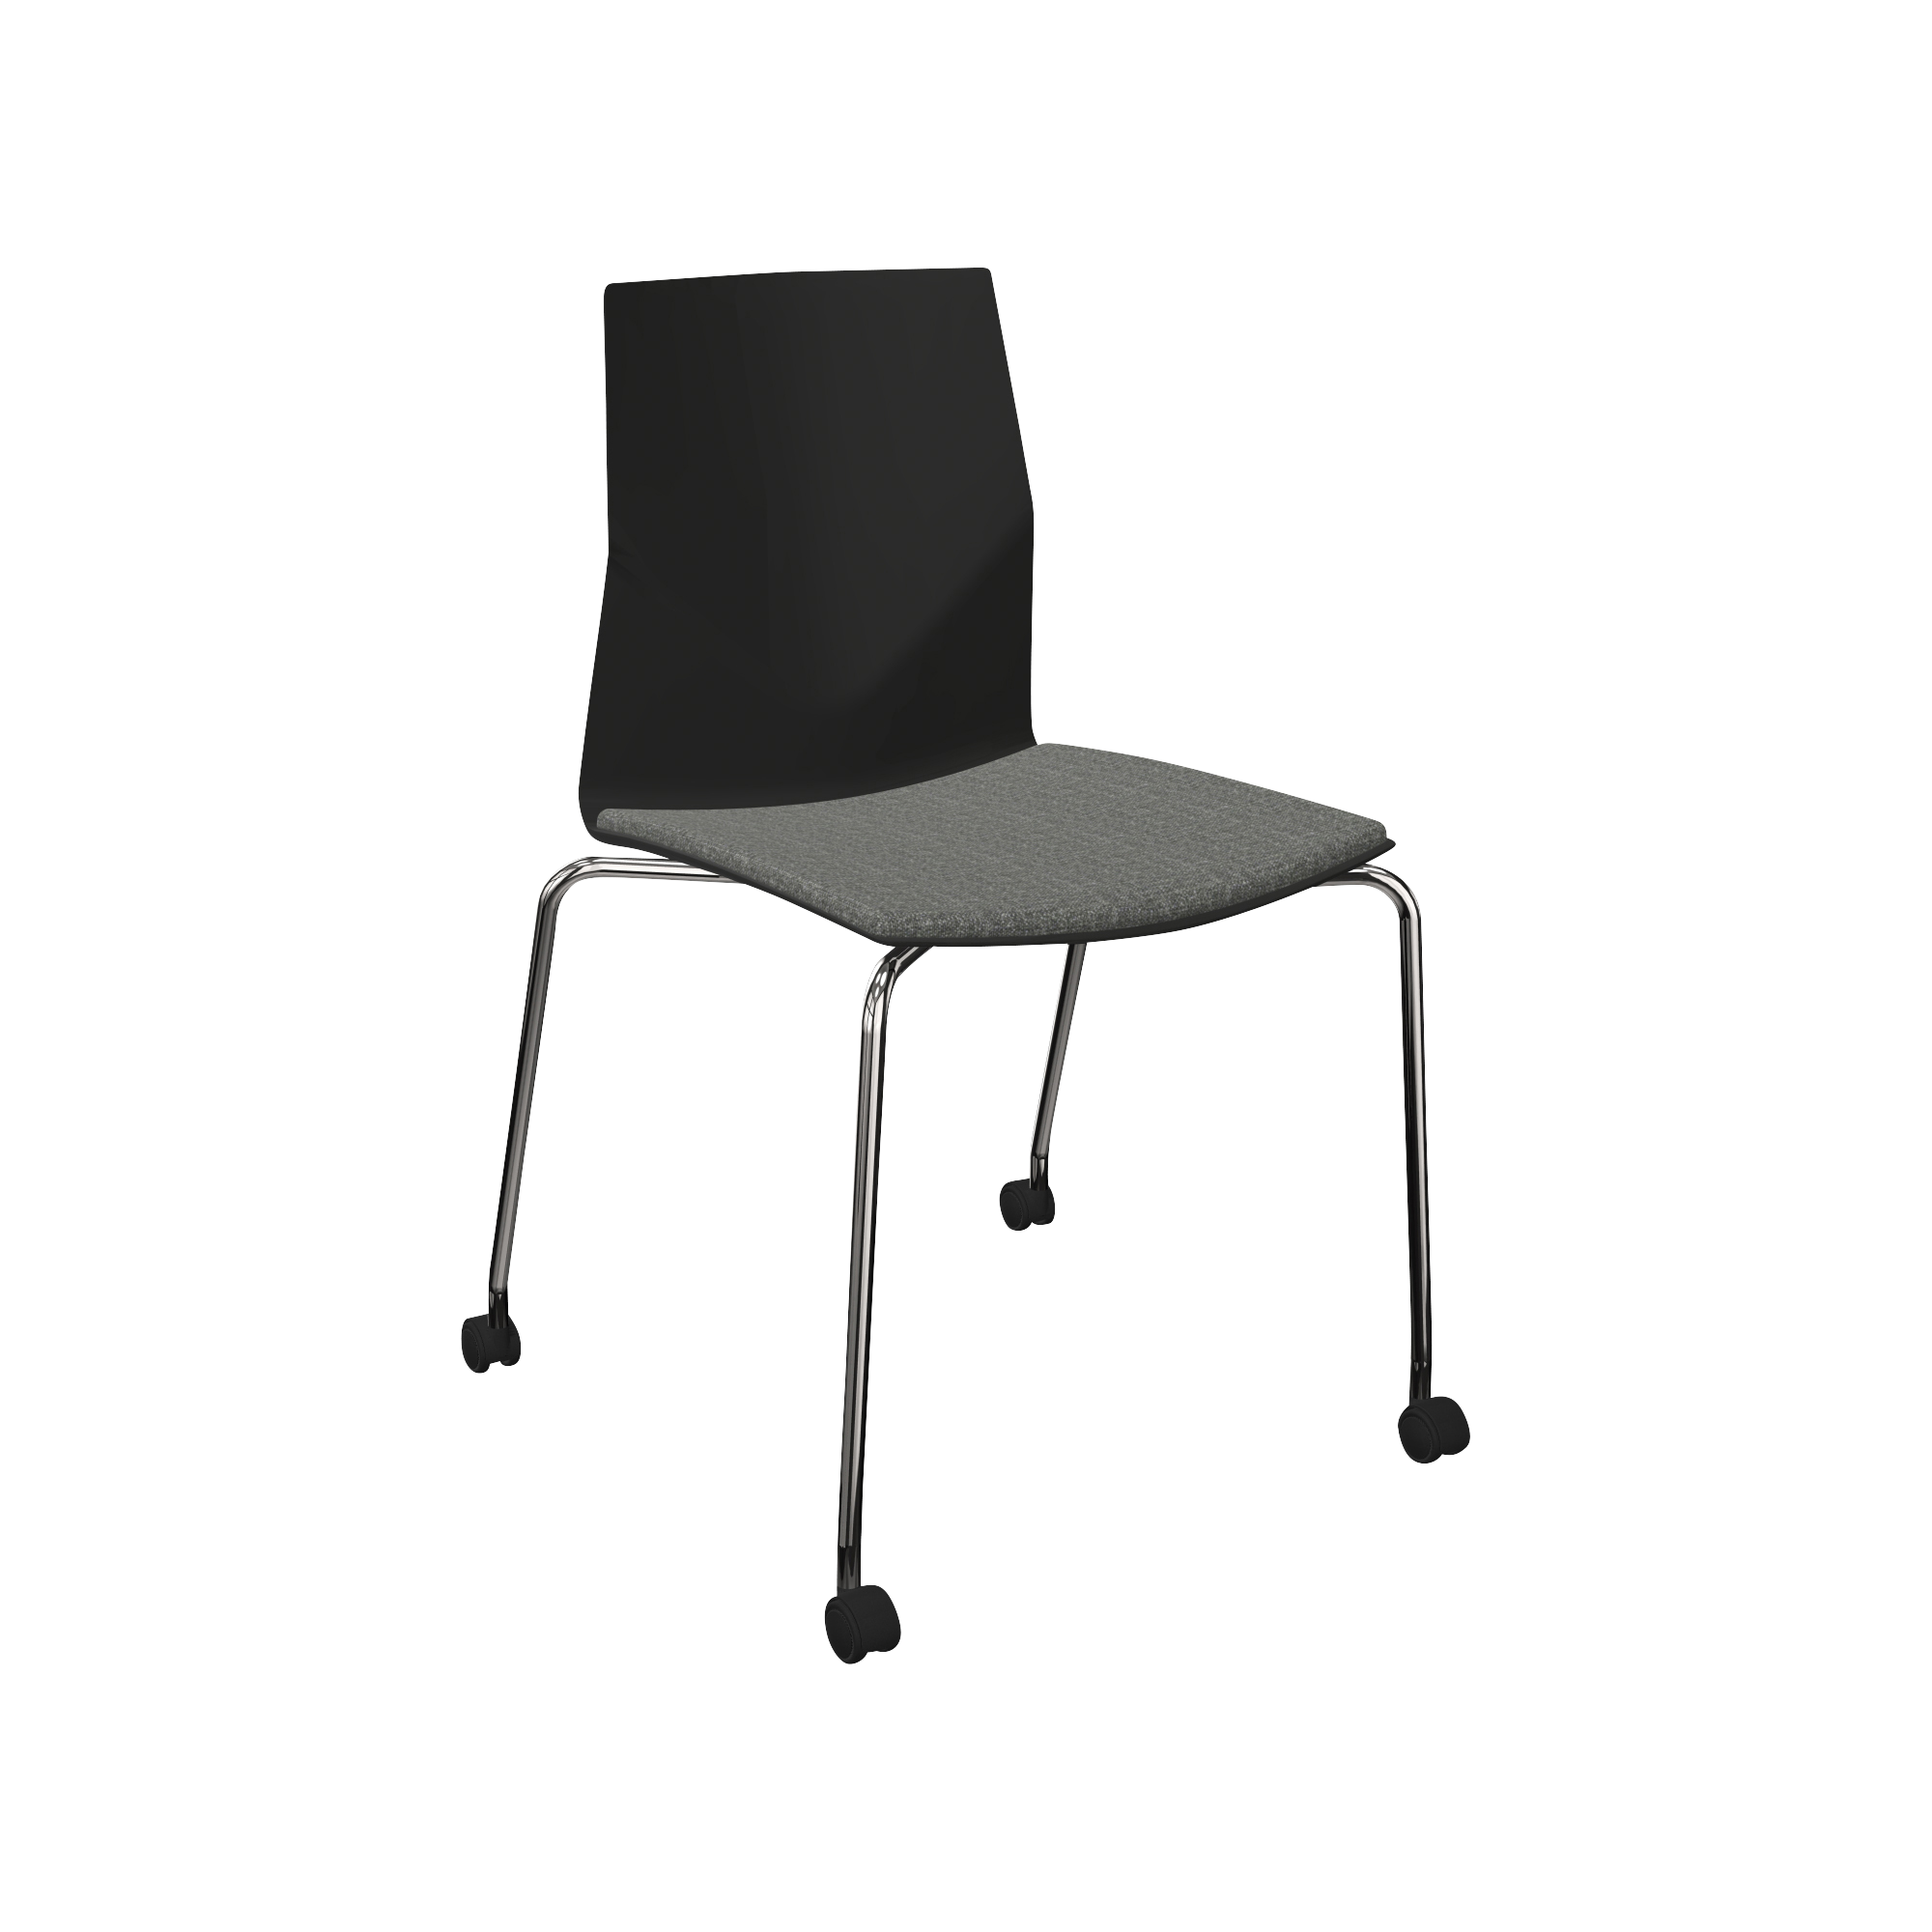 designer desk chair with wheels